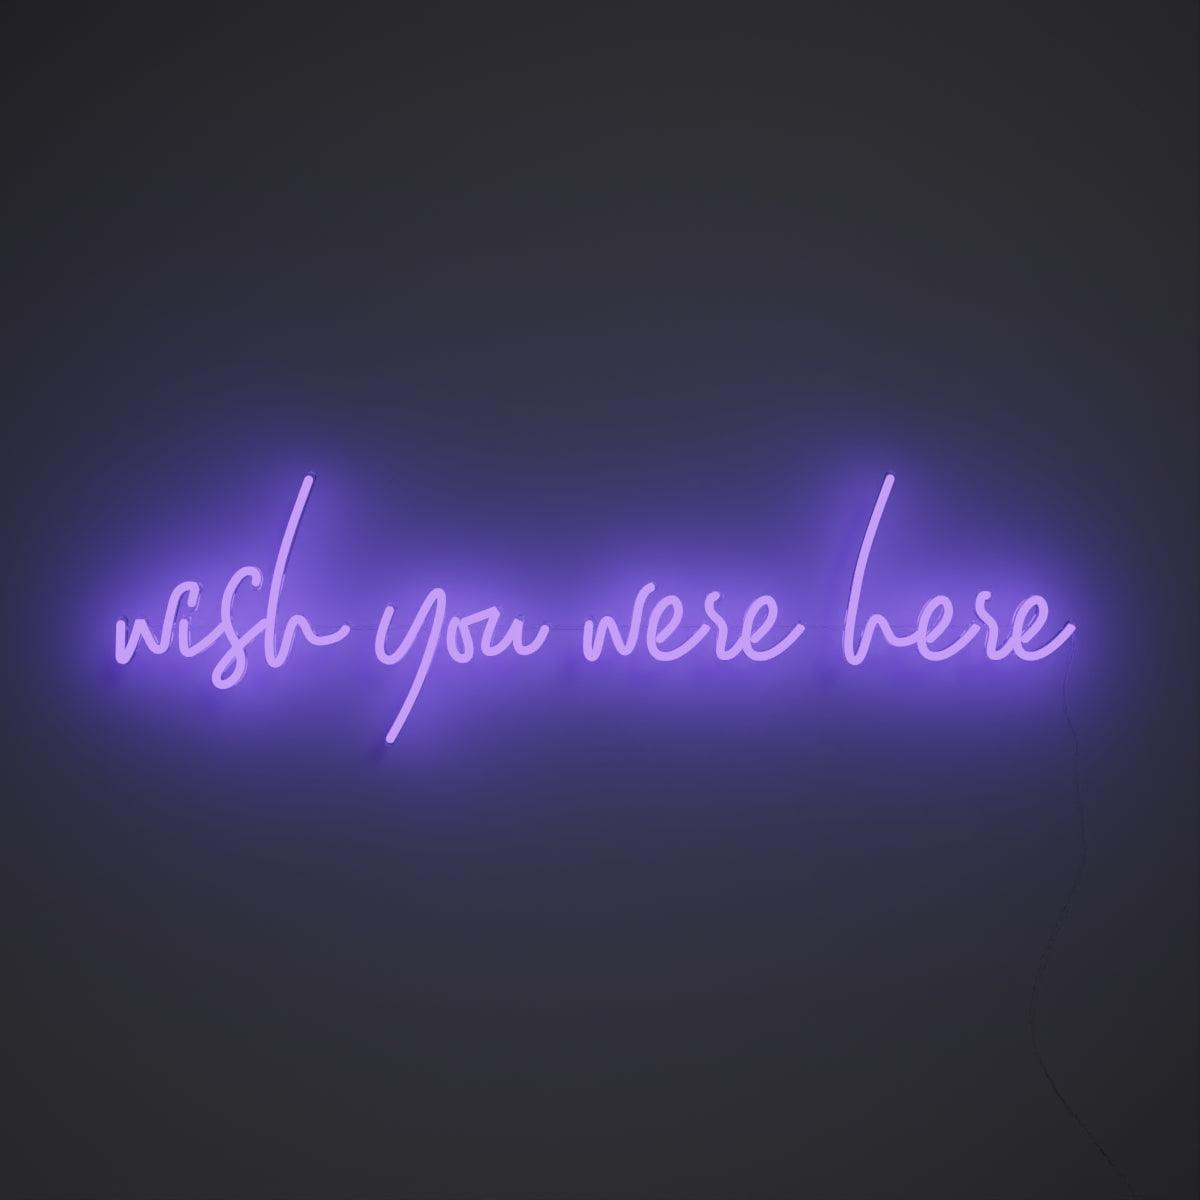 Wish you were here - Neon Tabela - Neonbir